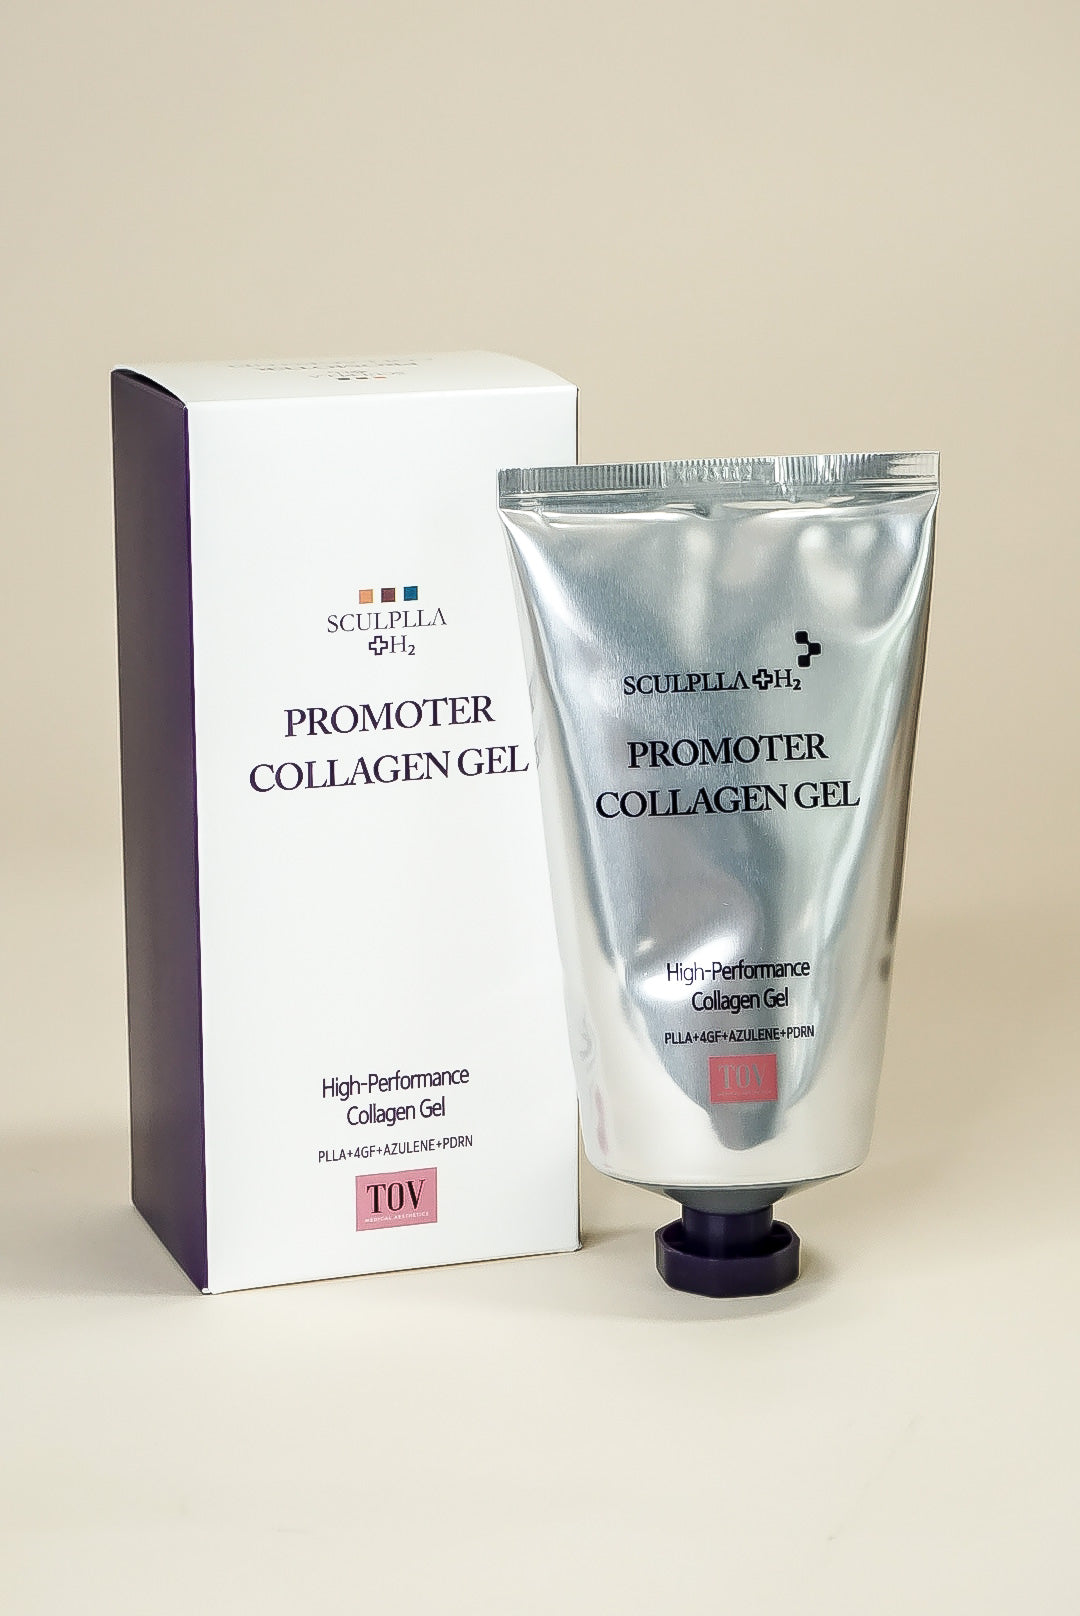 Time Master Pro with Sculplla Promoter Collagen Gel |  SkinJourney